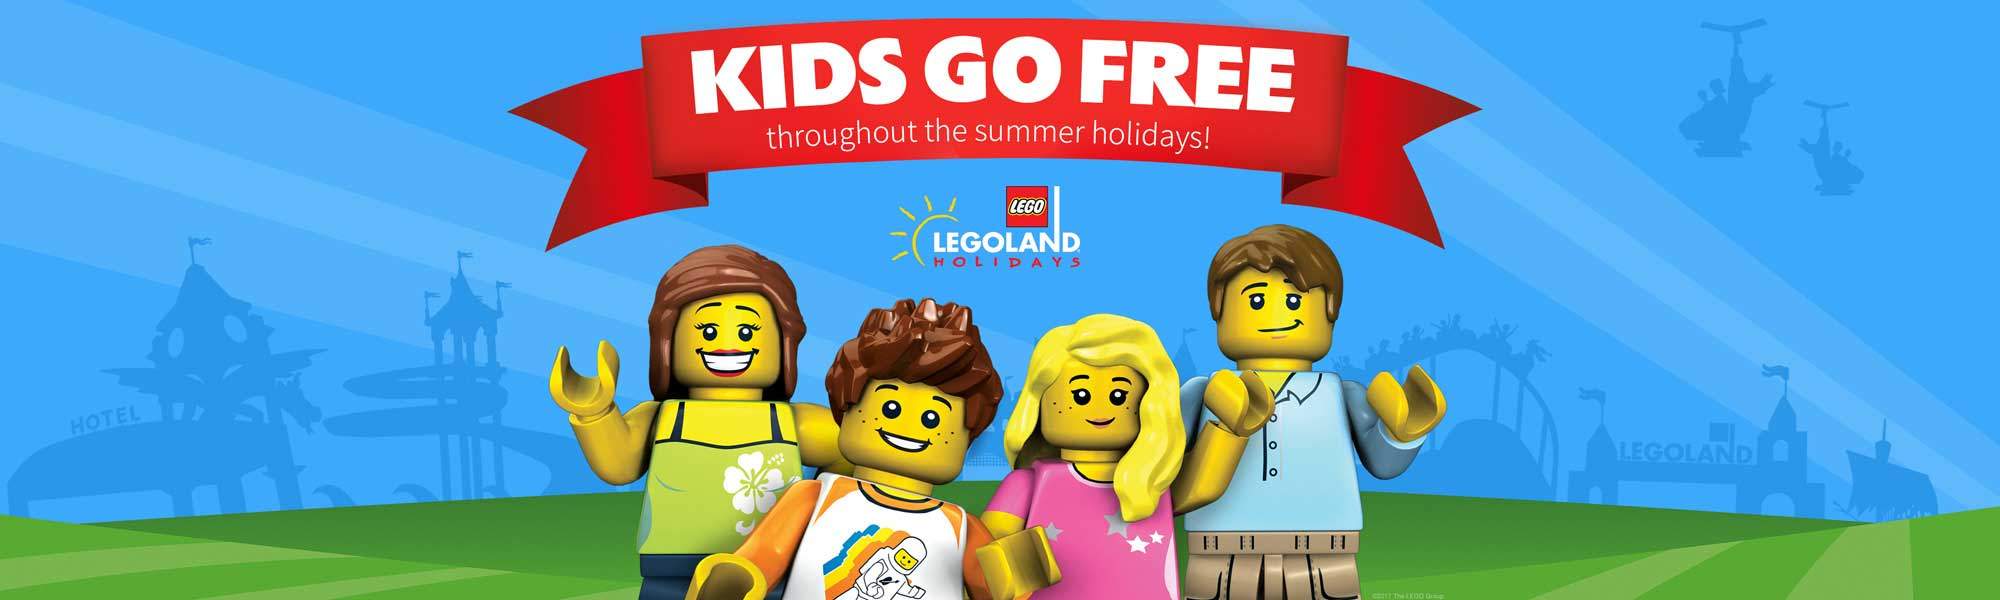 Lego land kids go free banner